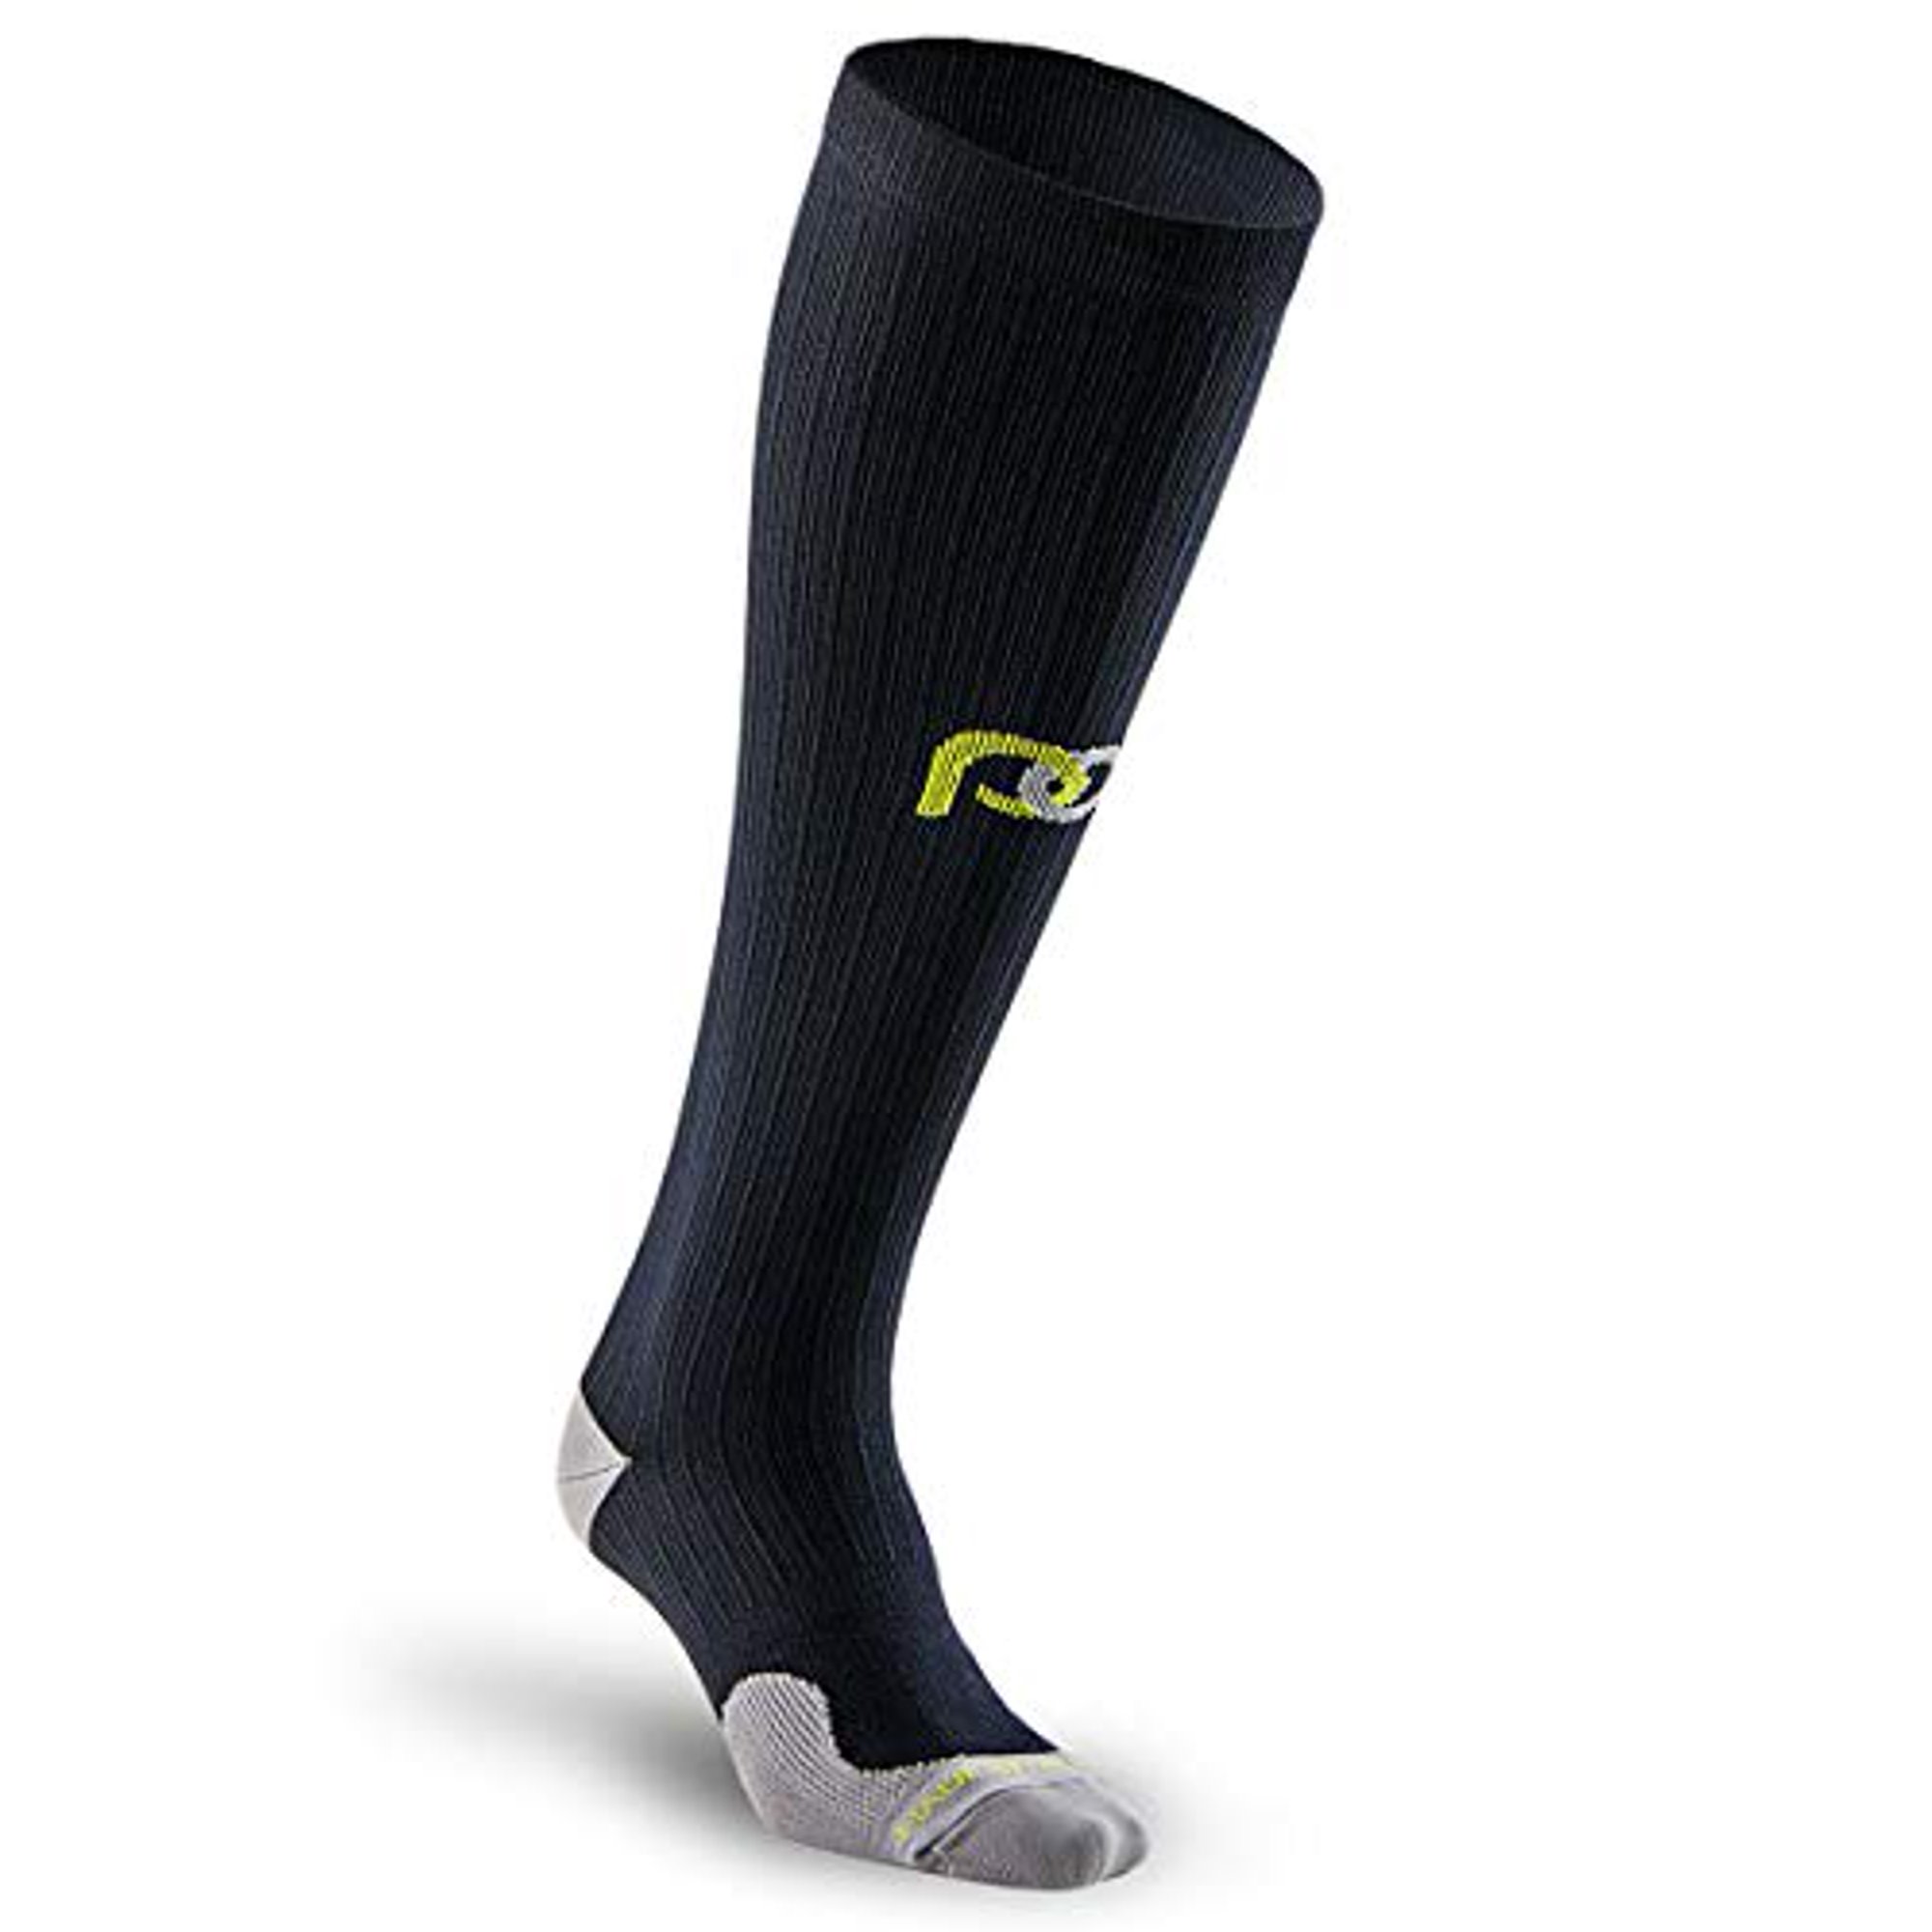 The Marathon Pro Compression Socks.